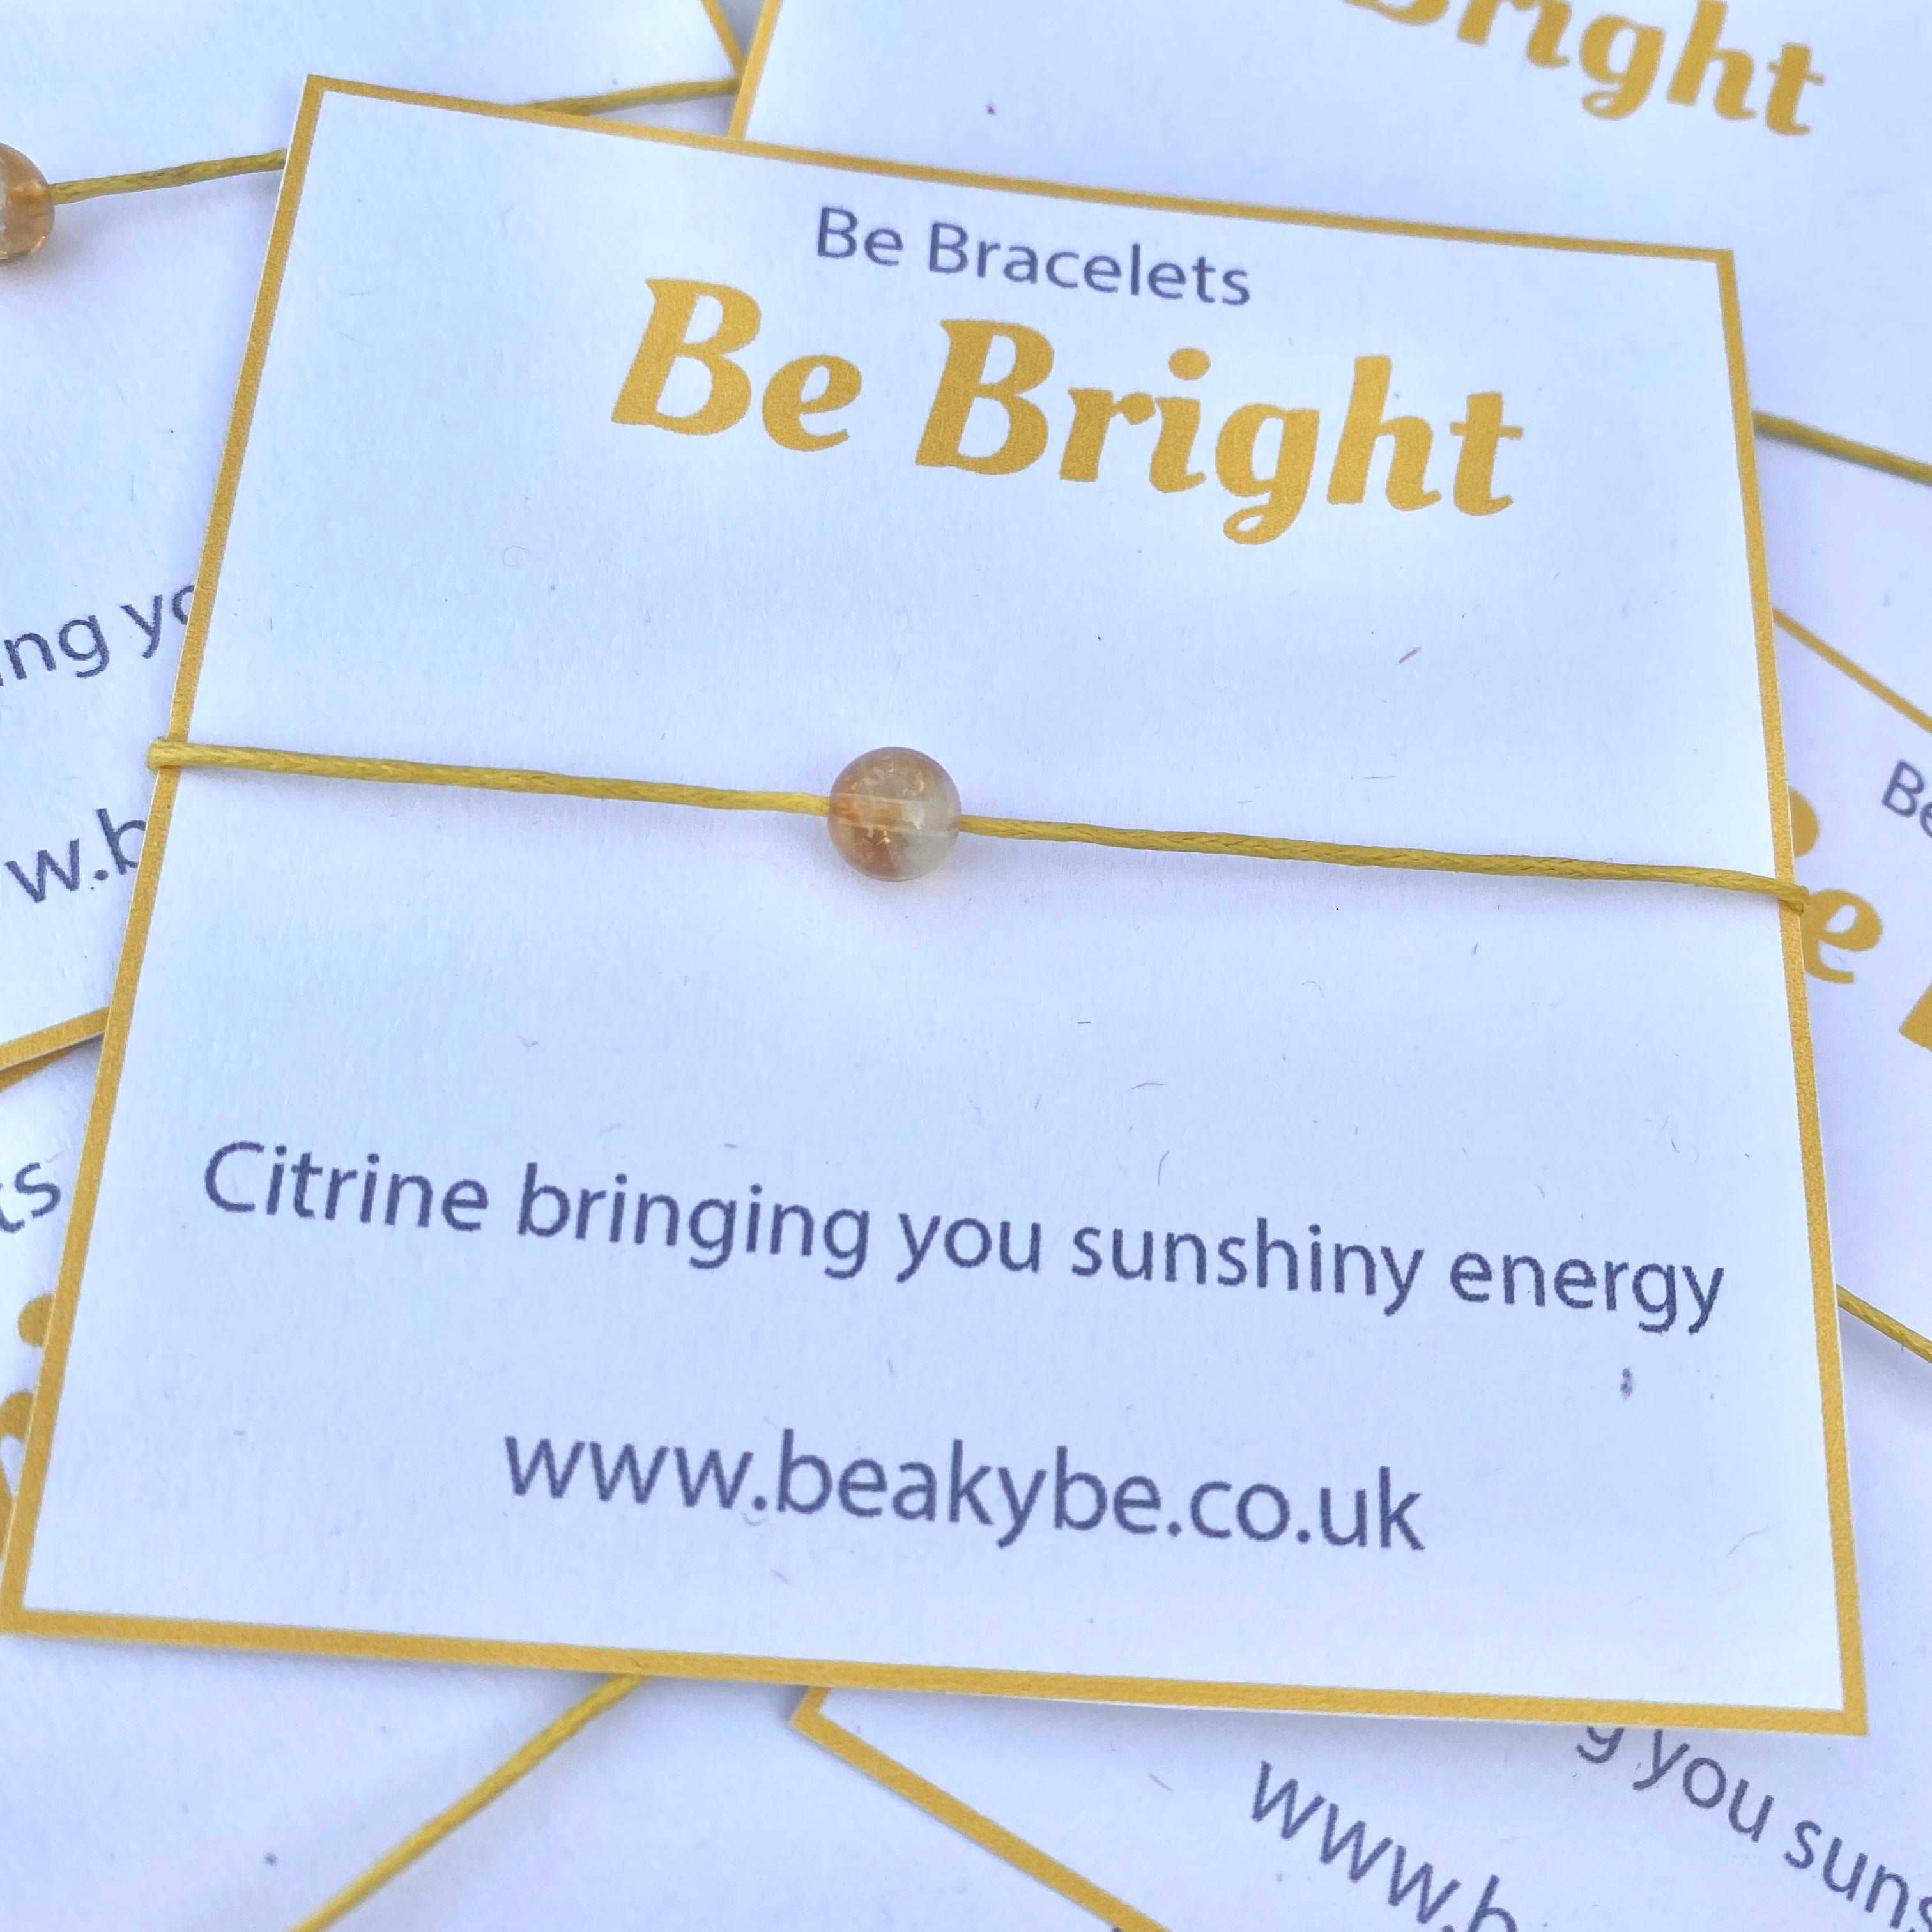 Be Bright - Be Bracelet - Citrine String Bracelet Gifts